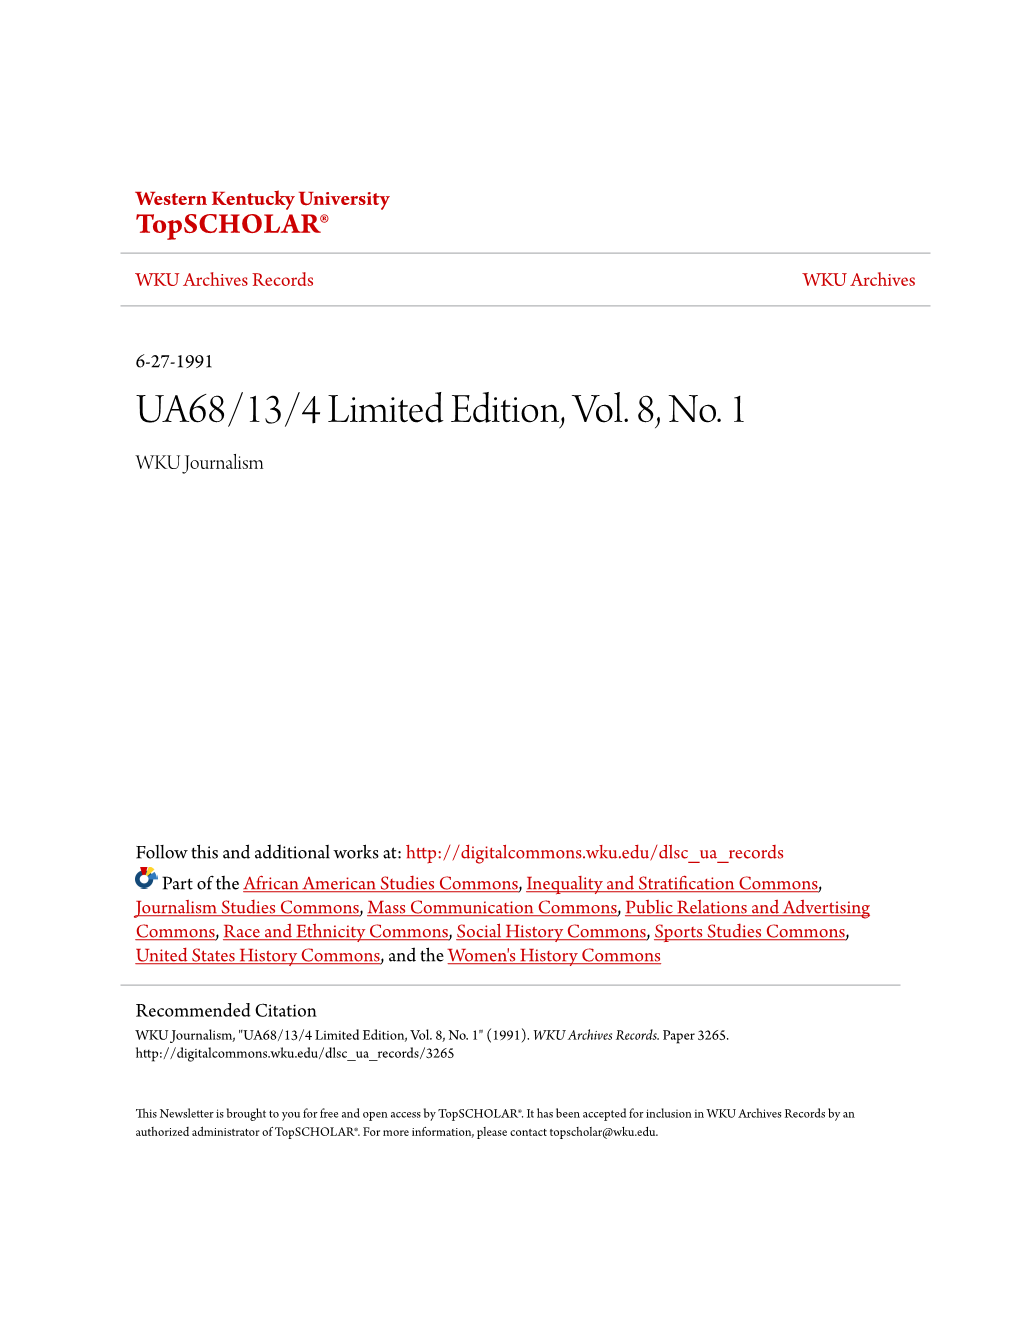 UA68/13/4 Limited Edition, Vol. 8, No. 1 WKU Journalism